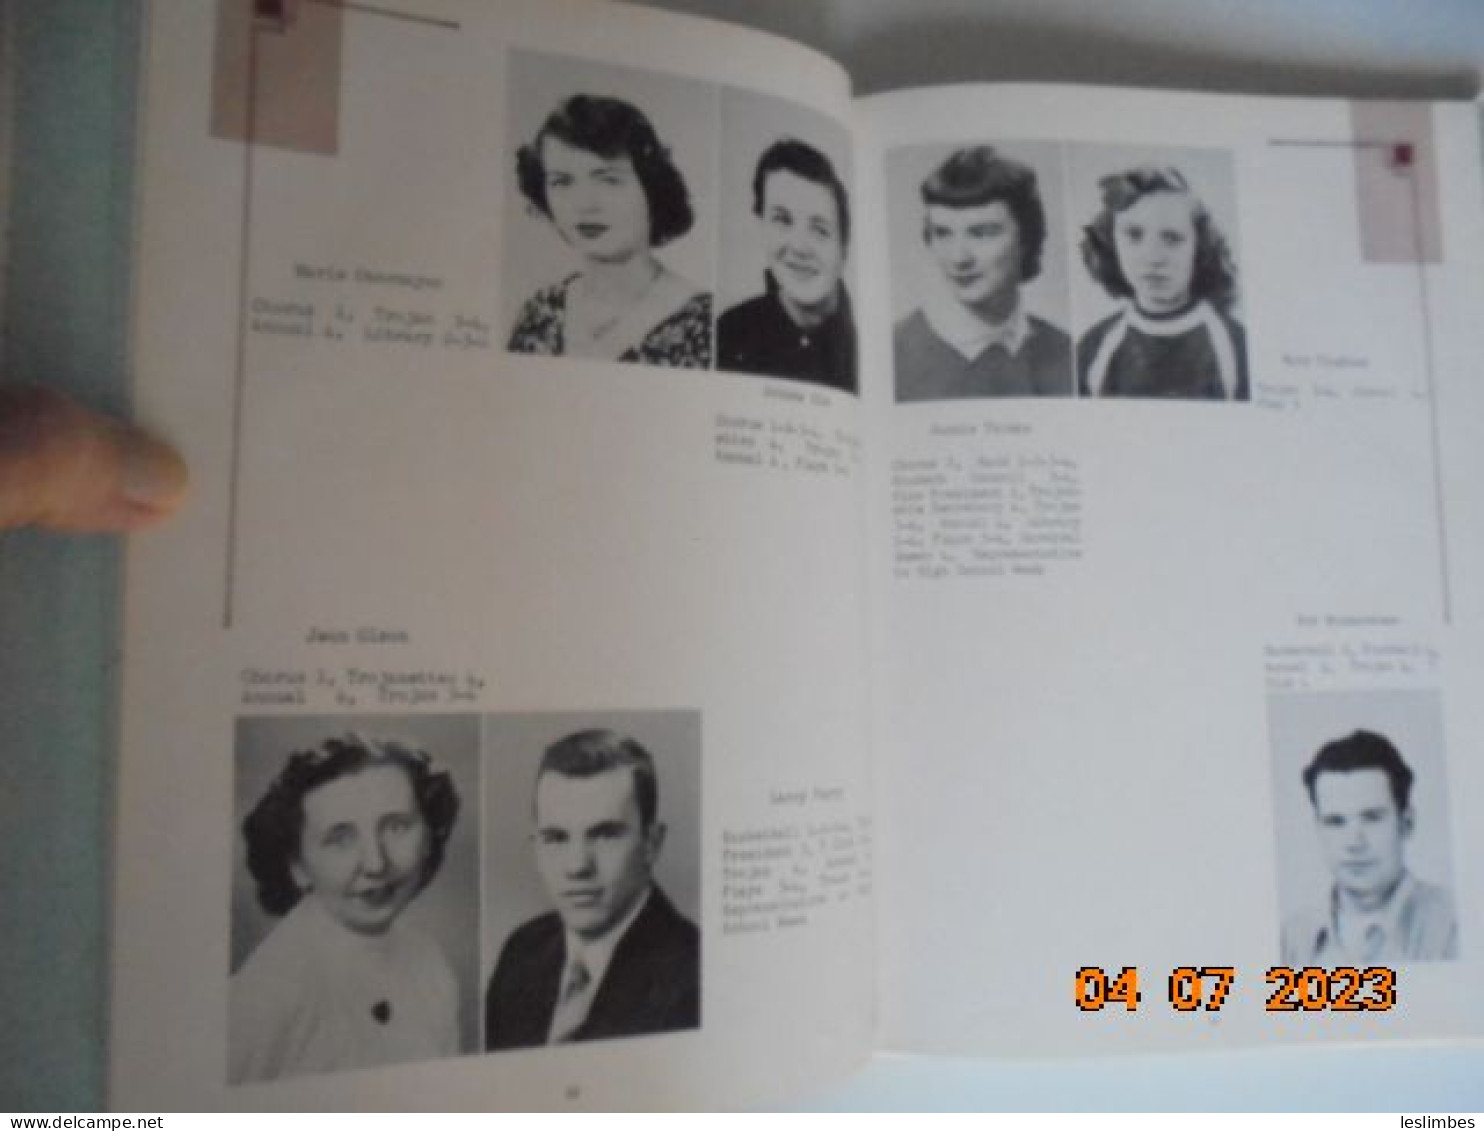 Trojan 1956 : Yearbook Of Troy High School (Troy, Montana) - 1950-Heden